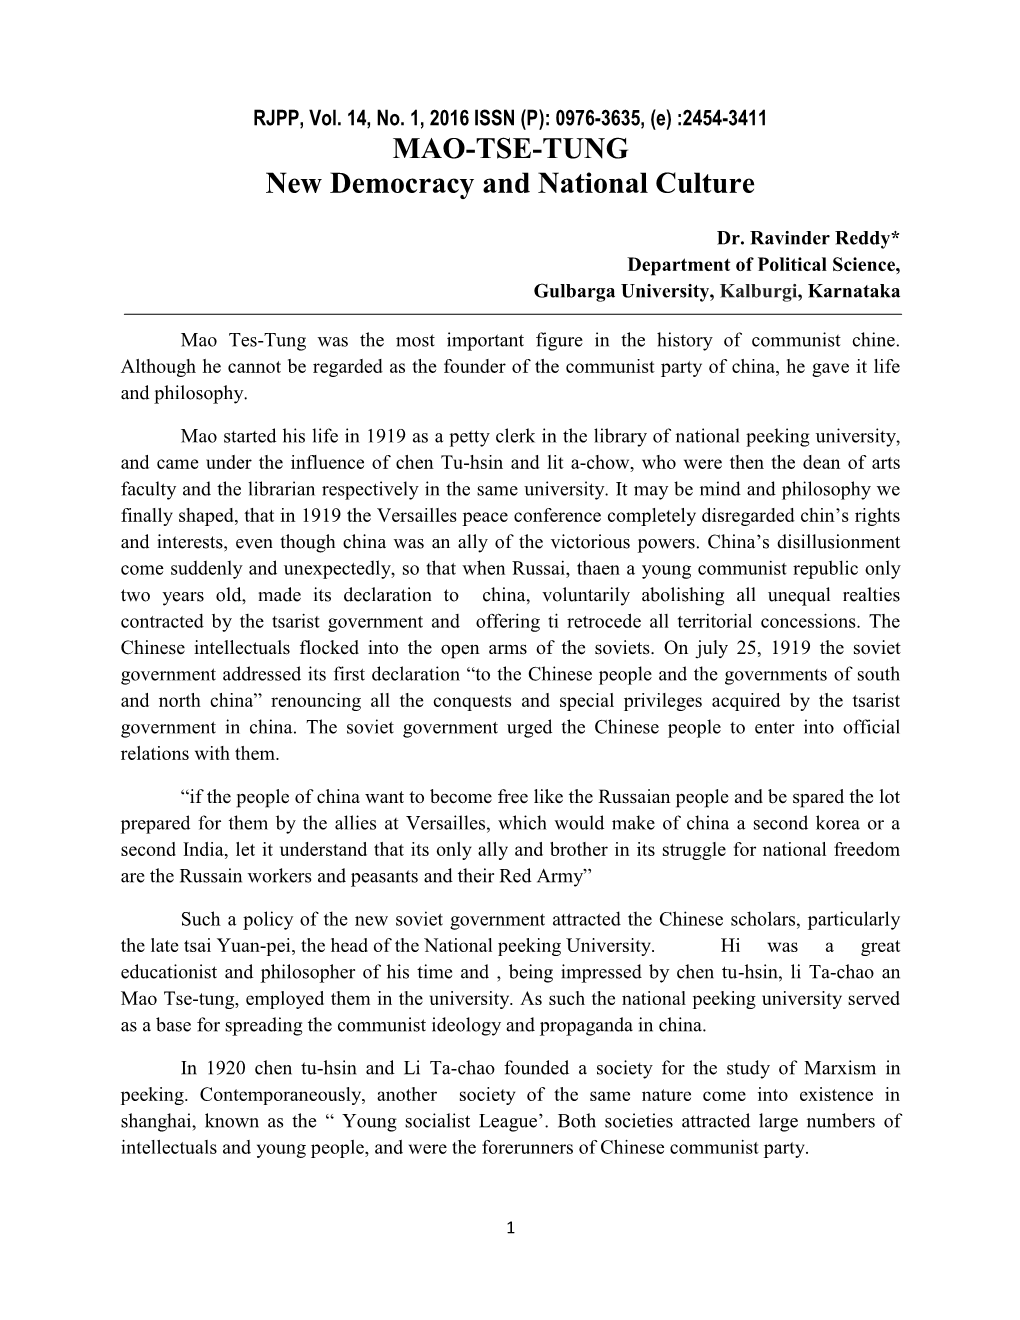 MAO-TSE-TUNG New Democracy and National Culture